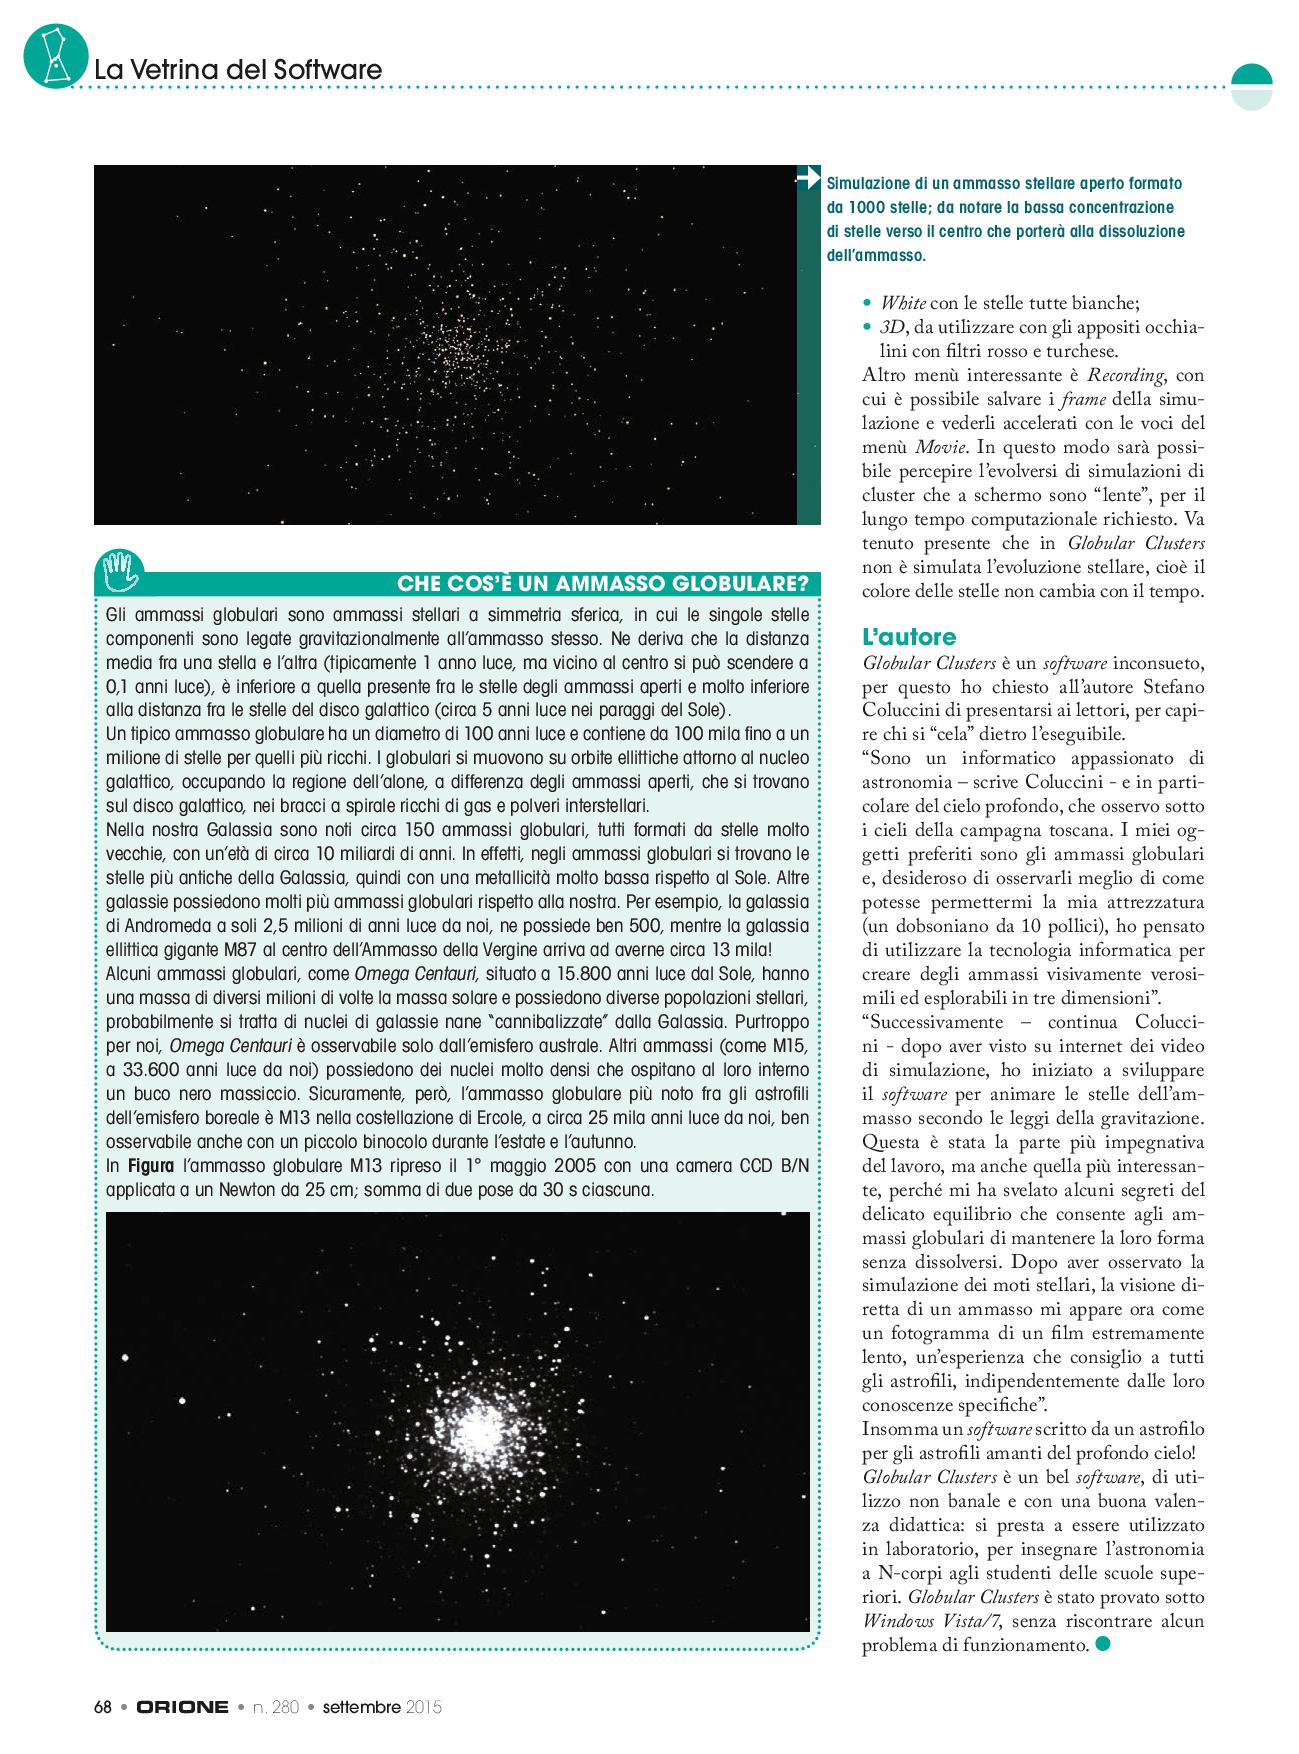 Vetrina del software: Globular Clusters